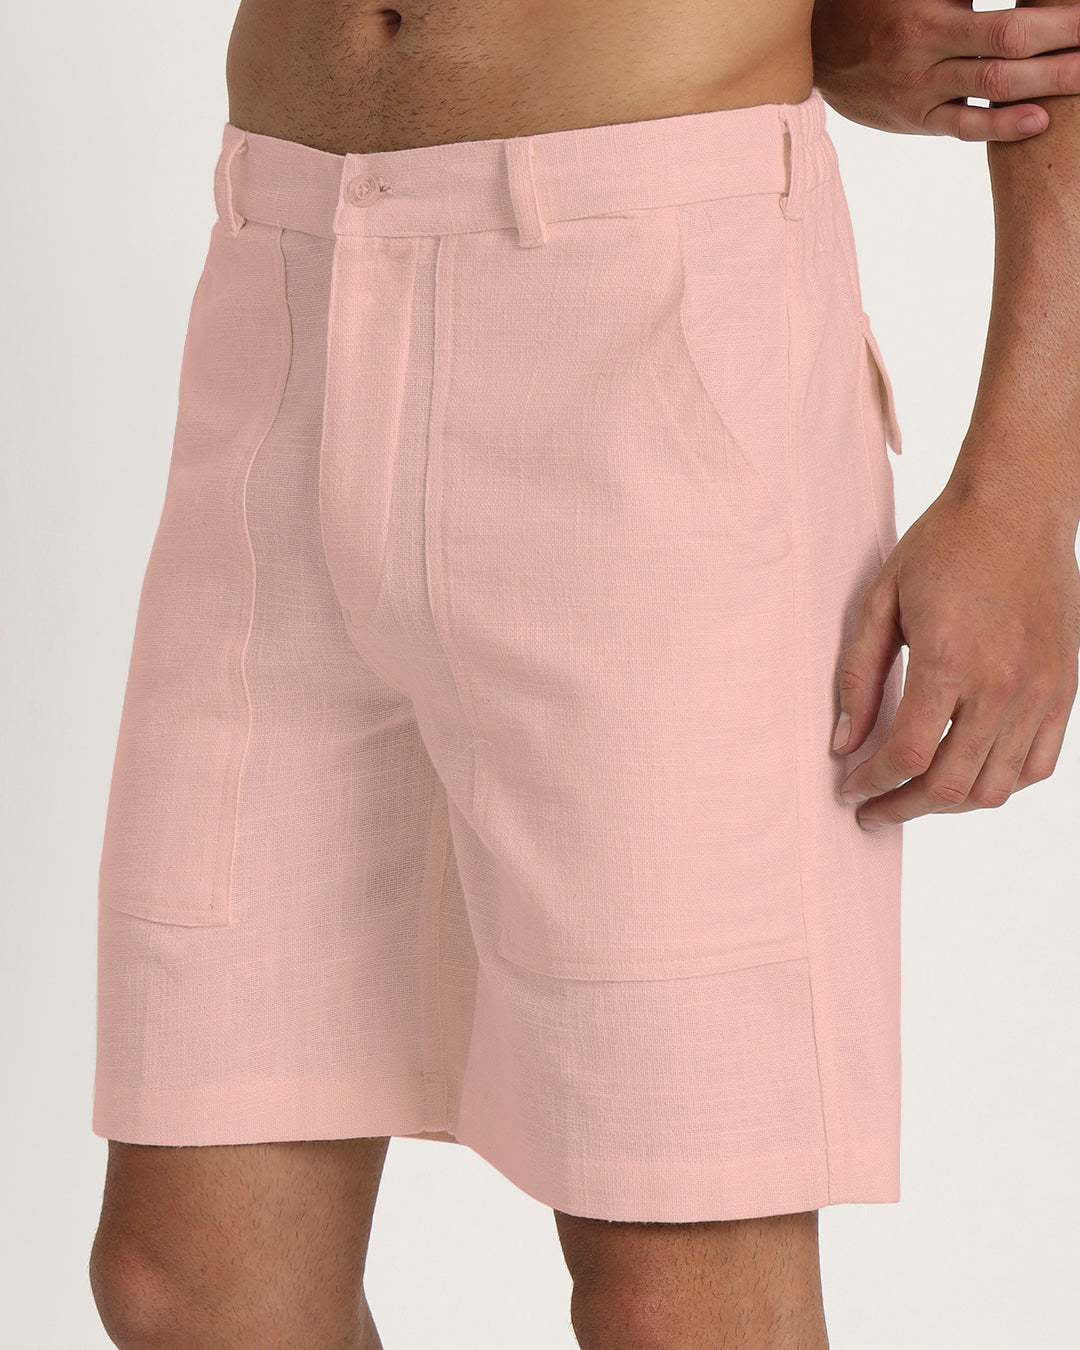 Combo : Patch Pocket Playtime Black & Fondant Pink Men's Shorts